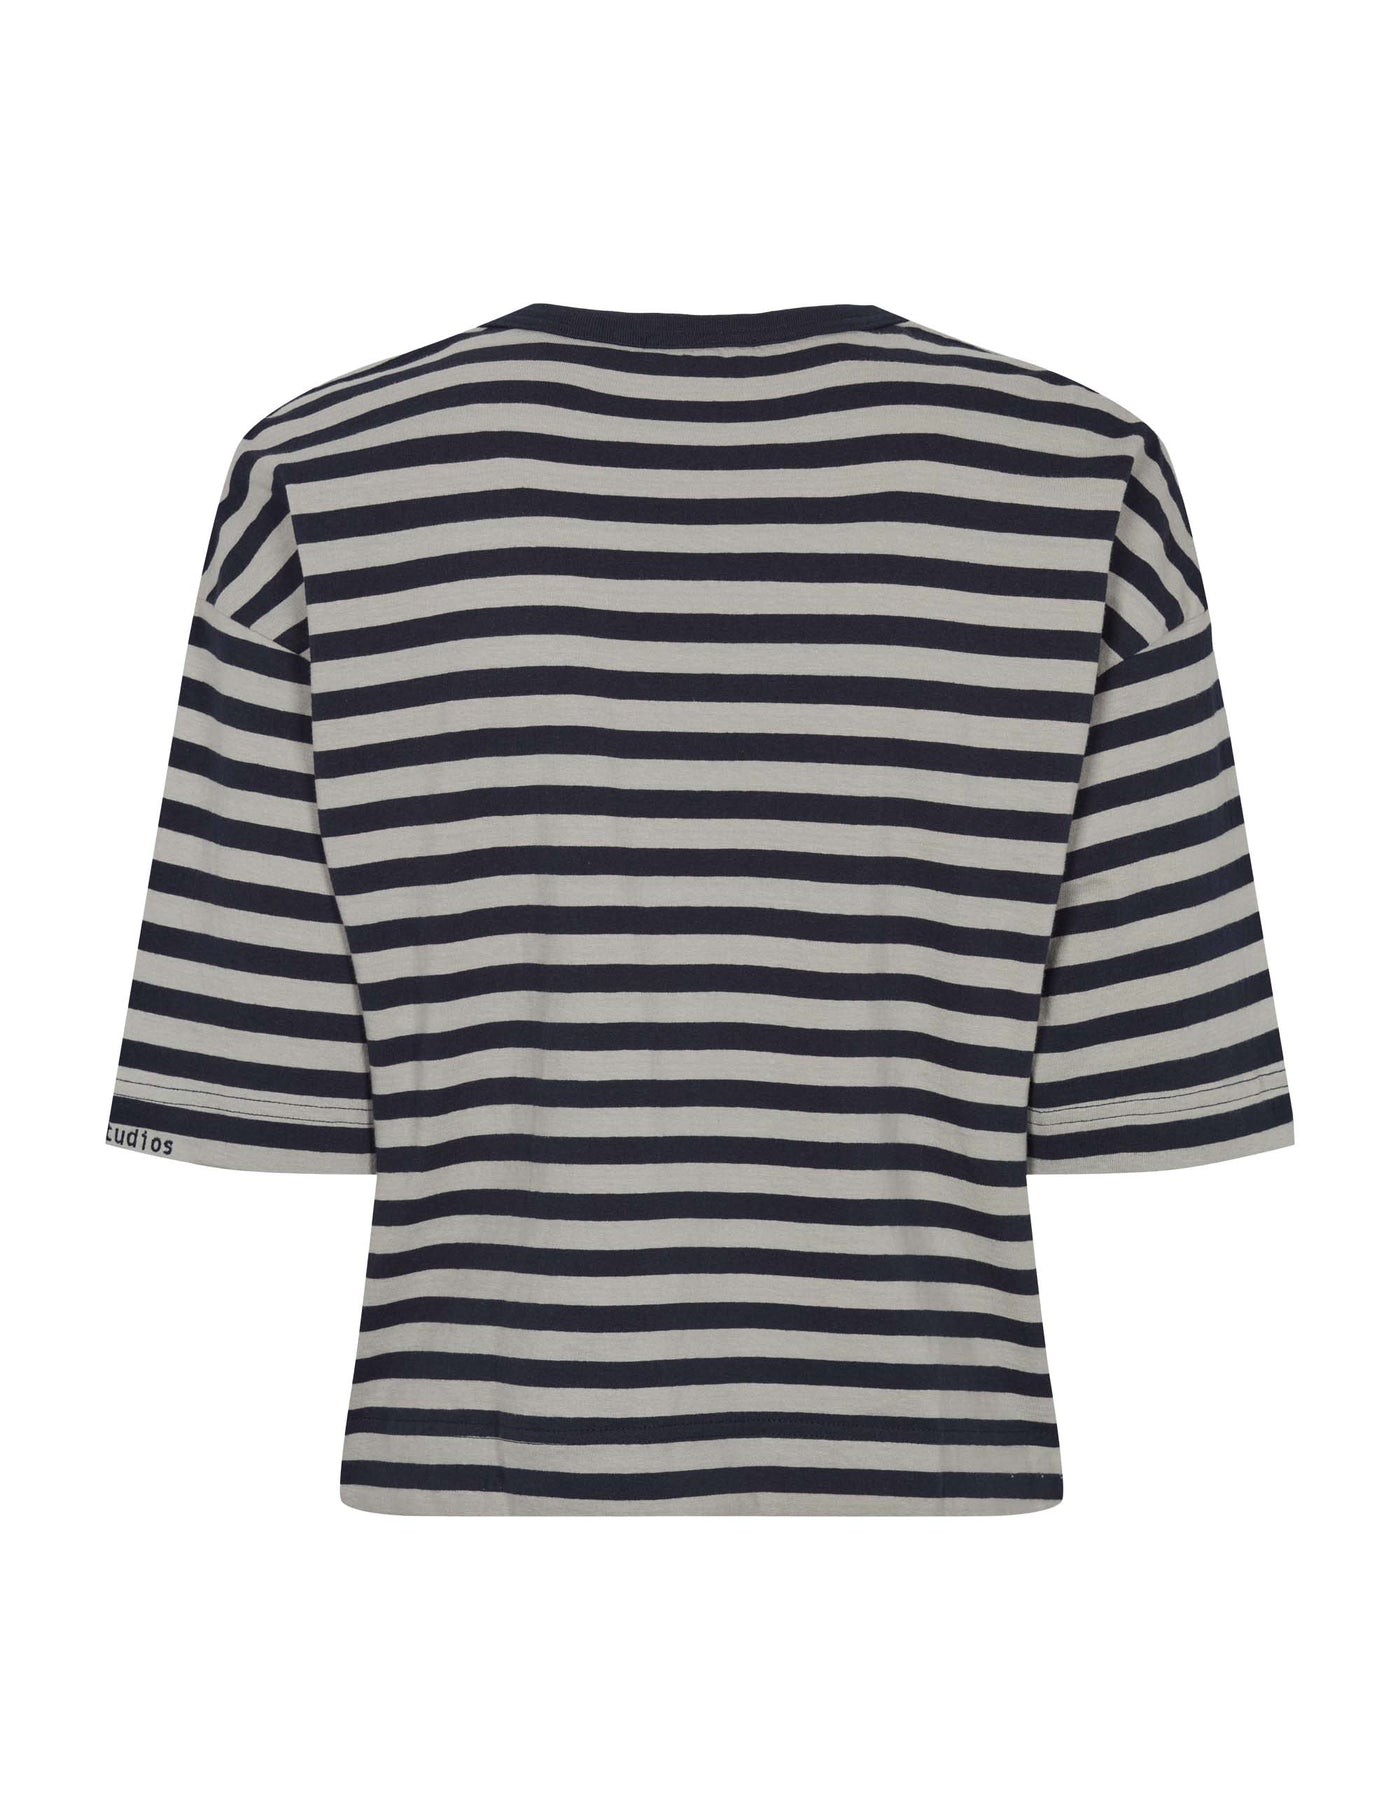 esmé studios ESSigne Striped Boxy T-shirt - GOTS T-Shirt 209 Dark Sapphire Stripe